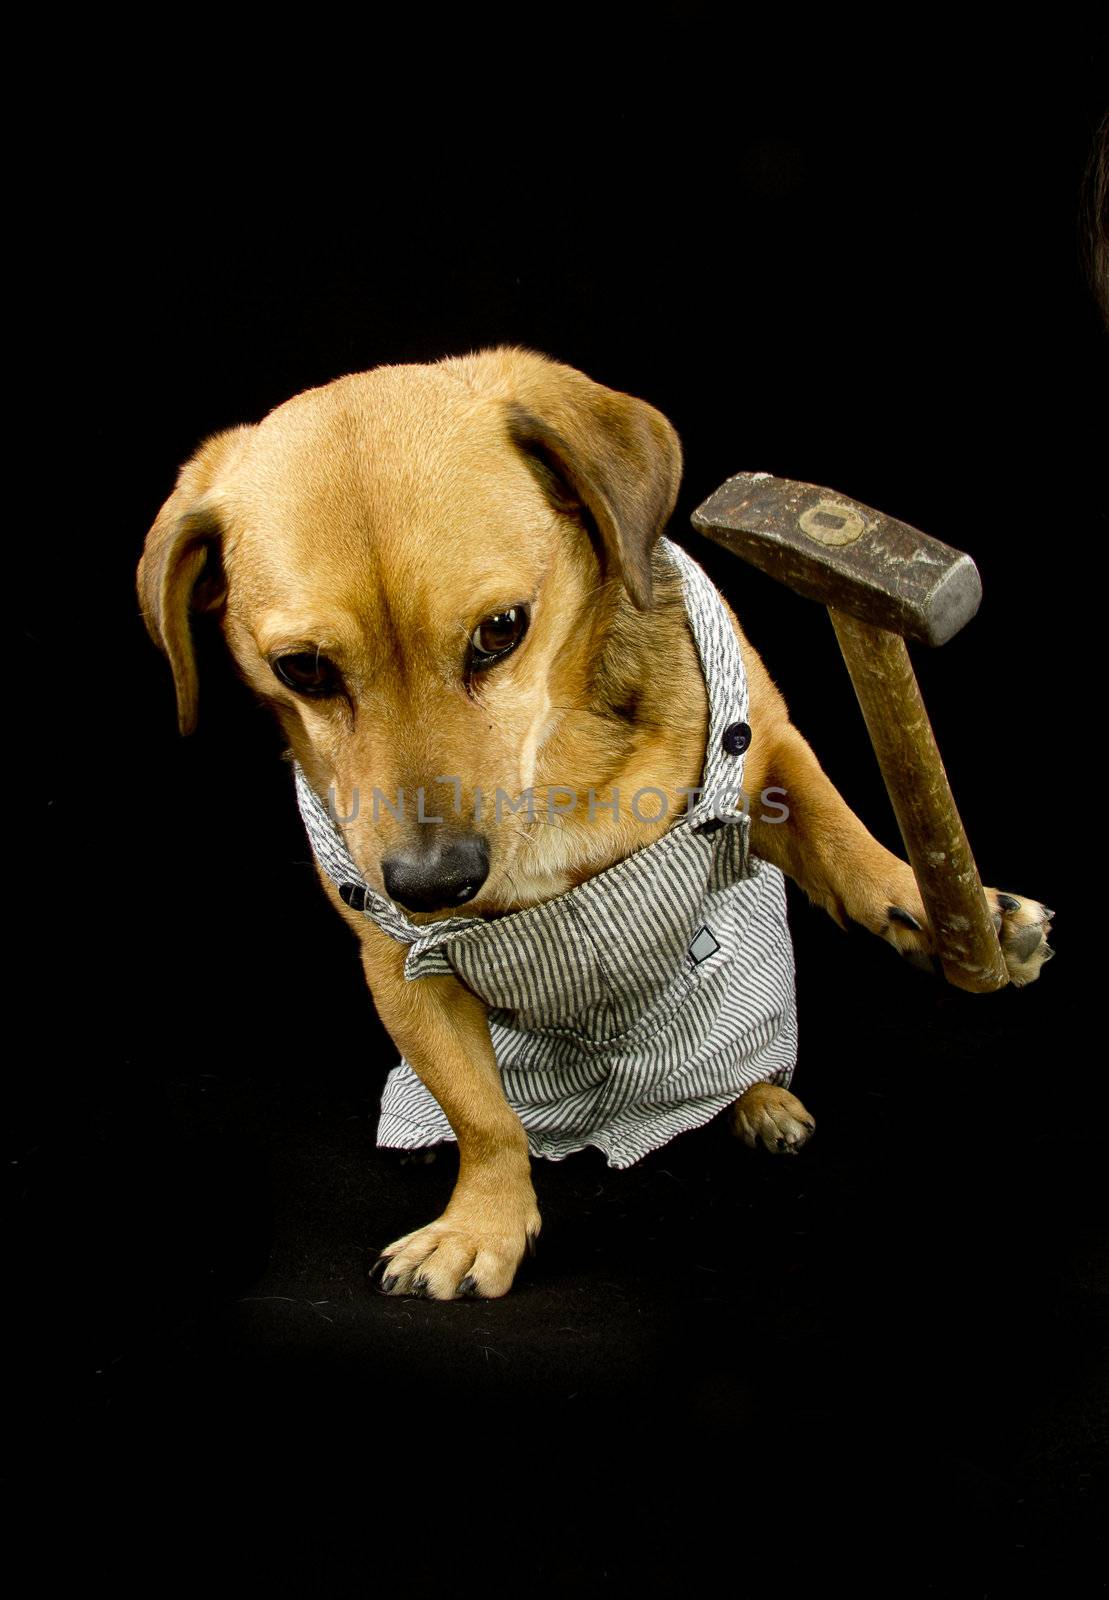 a mechanic dog by danilobiancalana